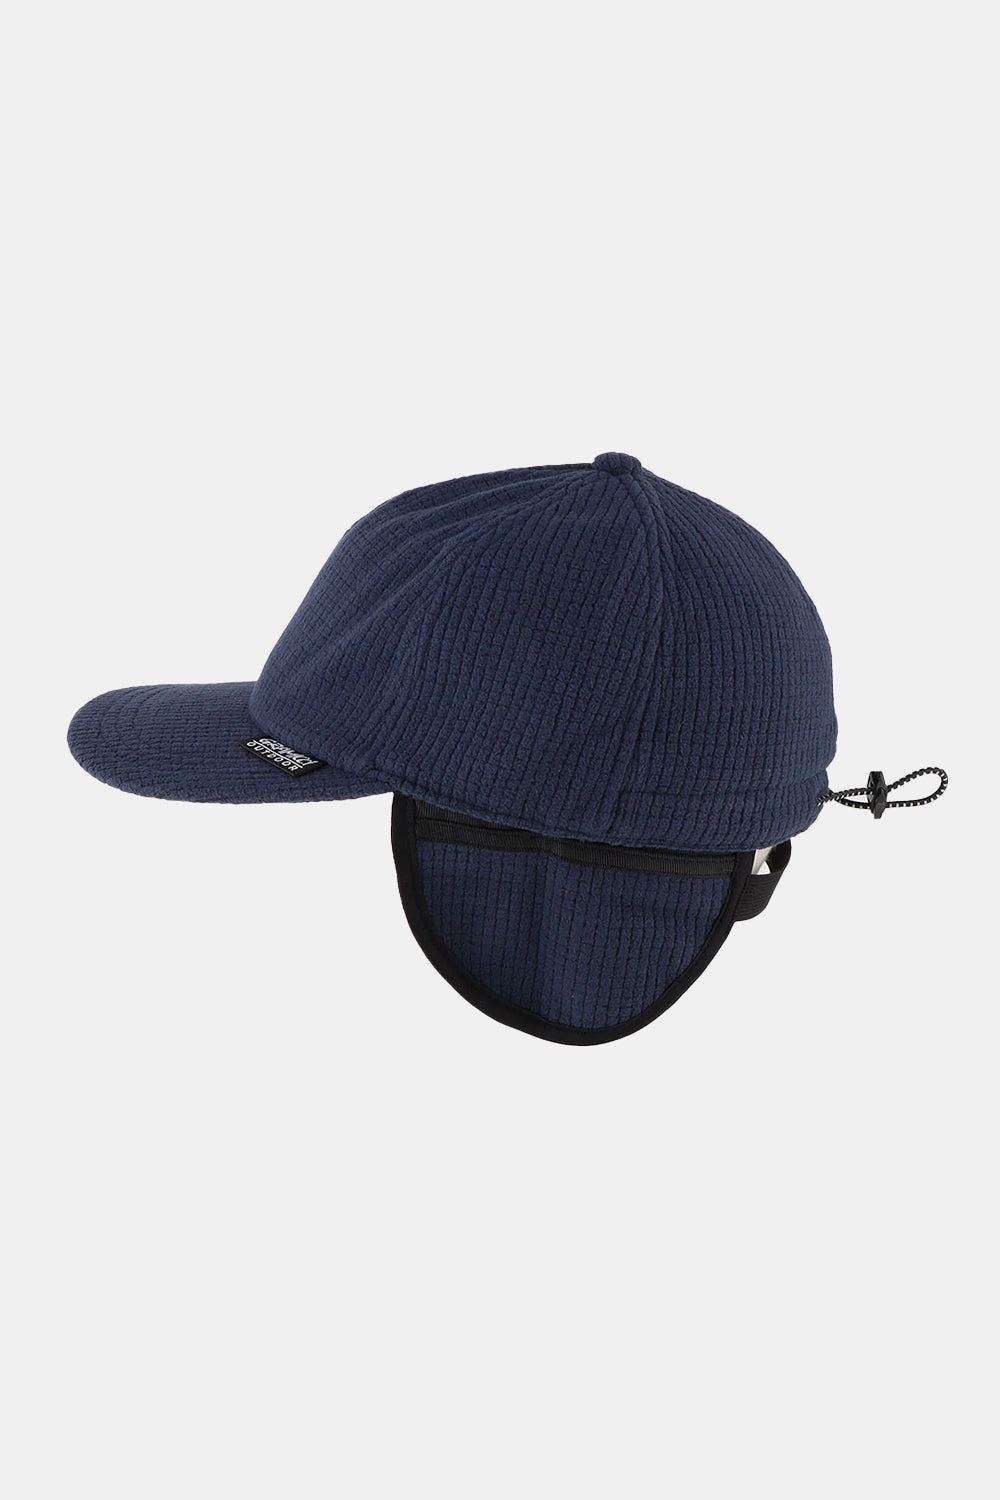 Gramicci Adjustable Ear Flap Cap (Navy)